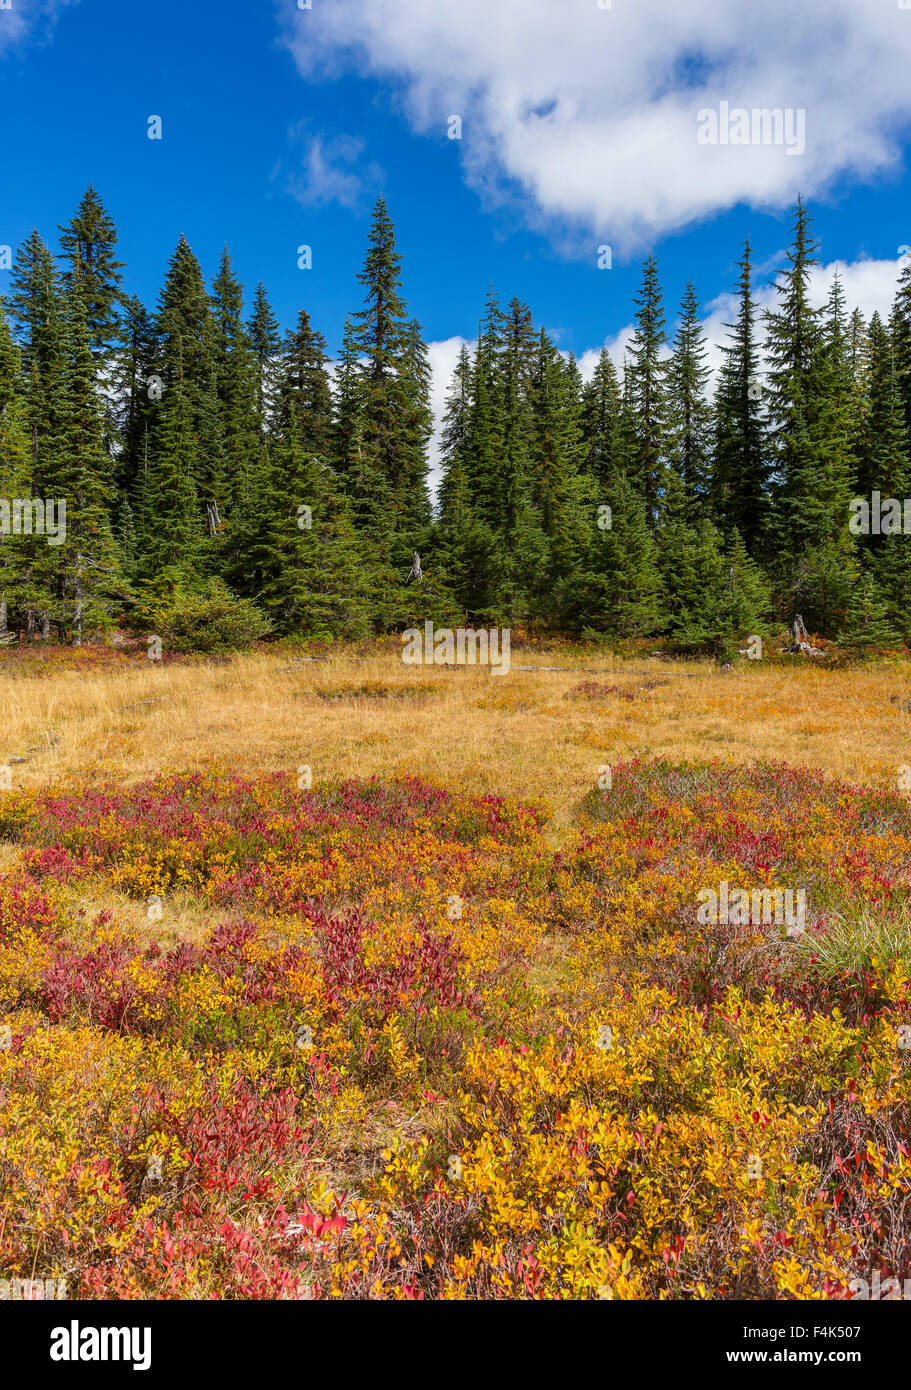 GIFFORD PINCHOT National Forest, Washington, EE.UU. - El follaje de otoño en Indian cielo desierto. Foto de stock